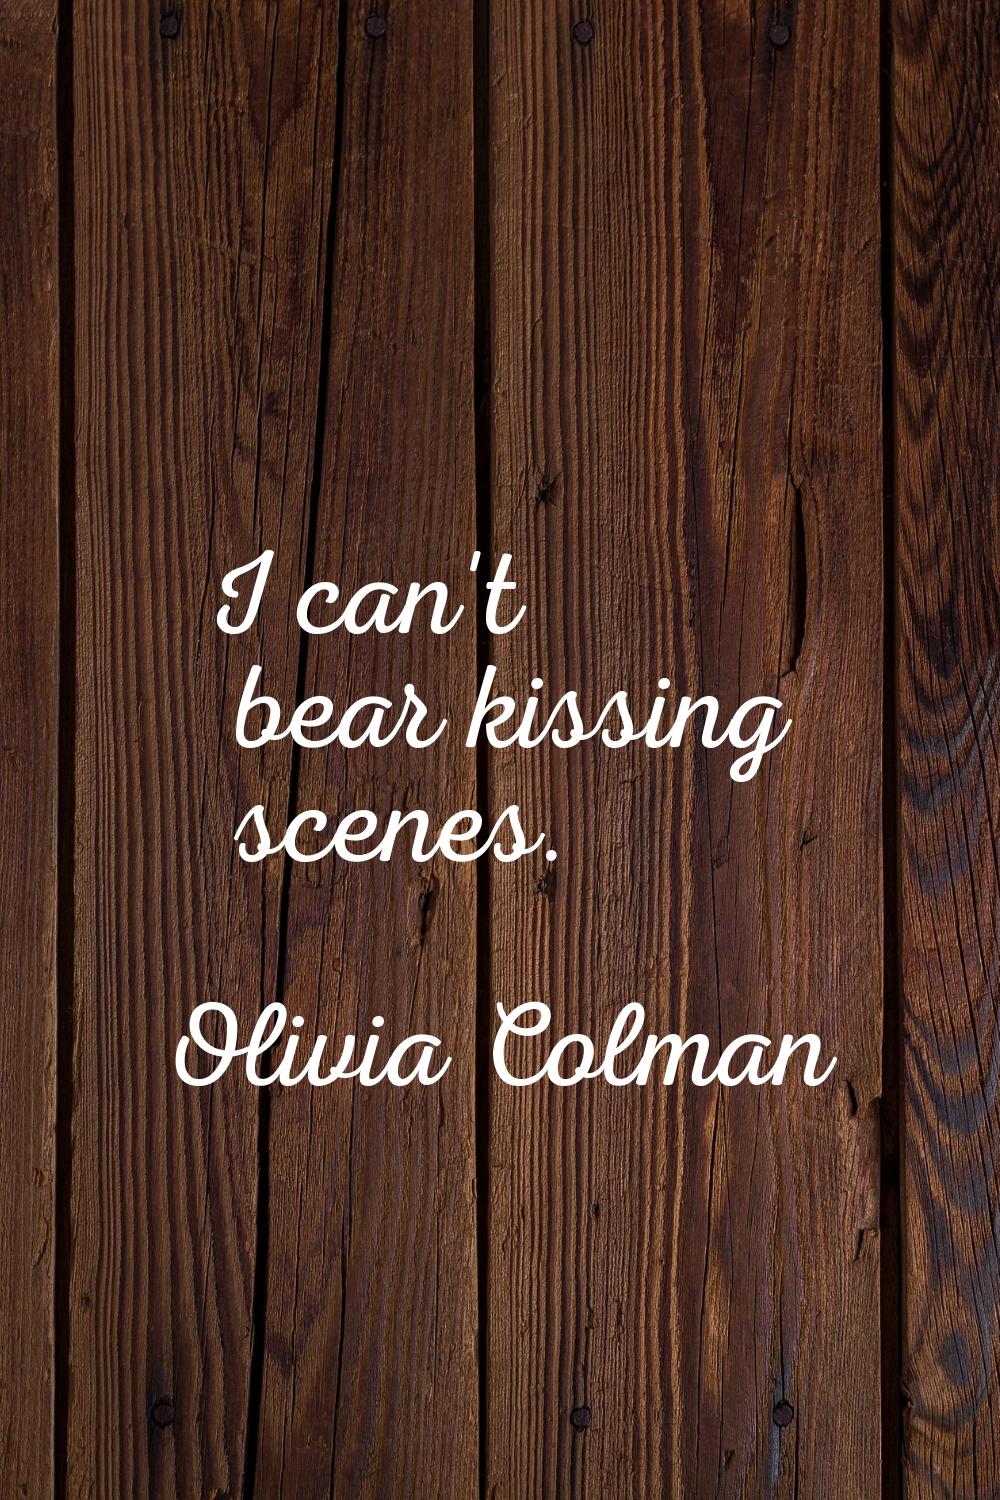 I can't bear kissing scenes.